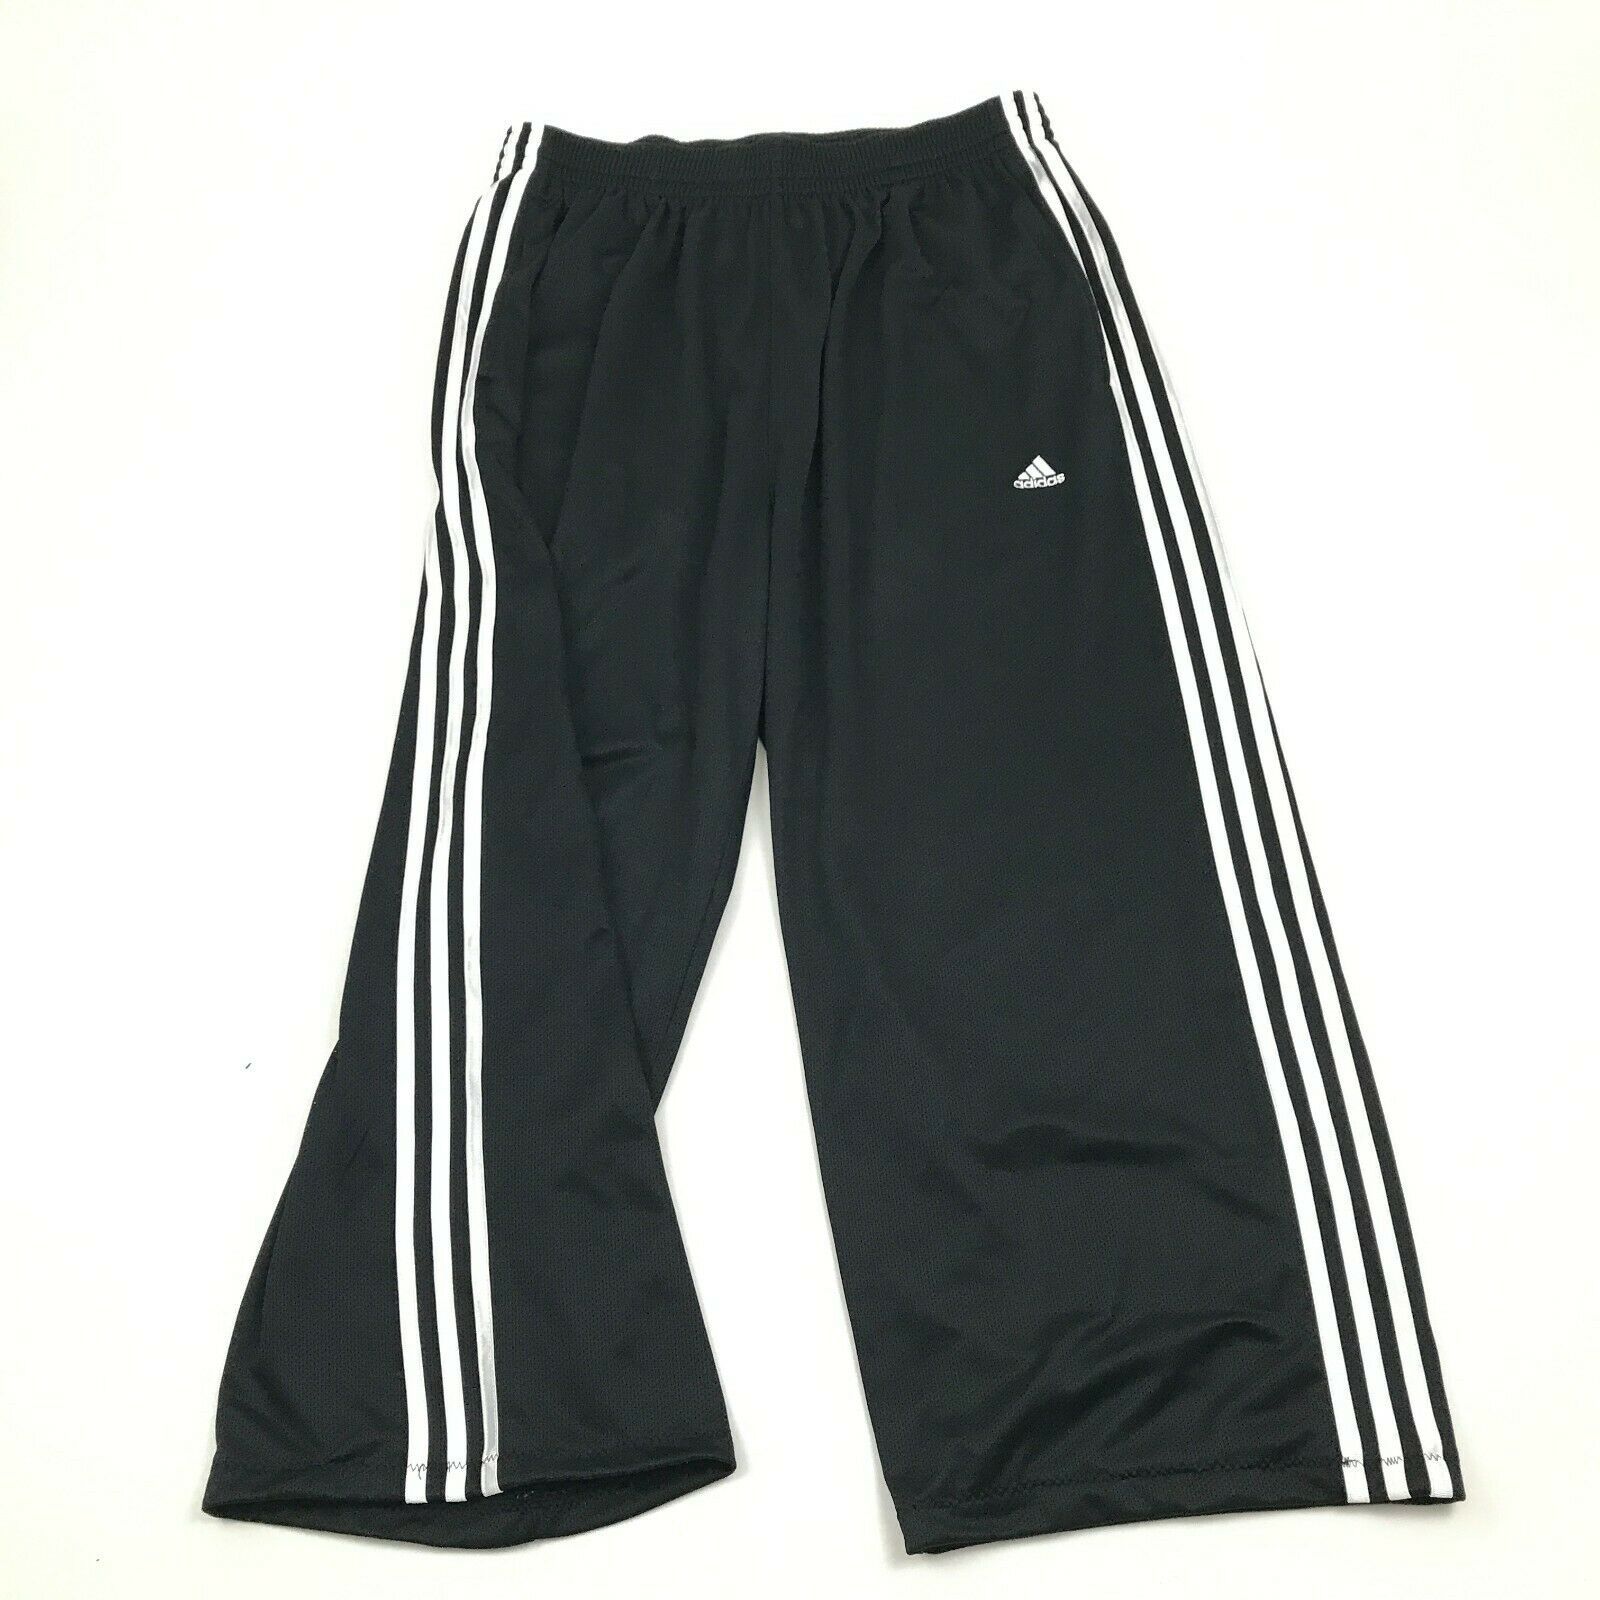 Adidas ClimaLite Track Workout Pants Men's Size XL Black Straight Leg ...